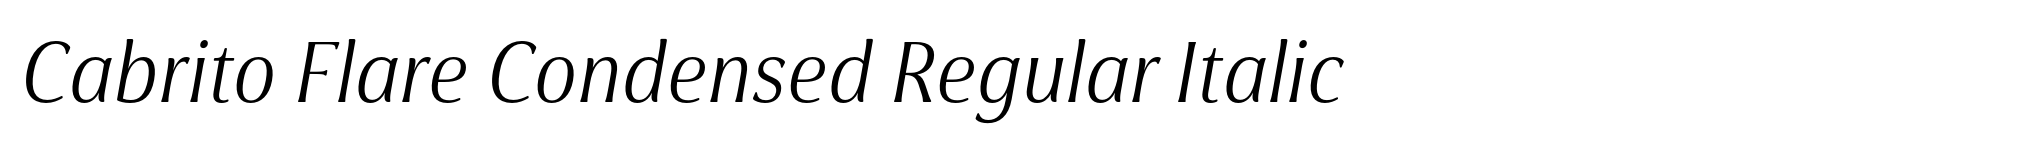 Cabrito Flare Condensed Regular Italic image